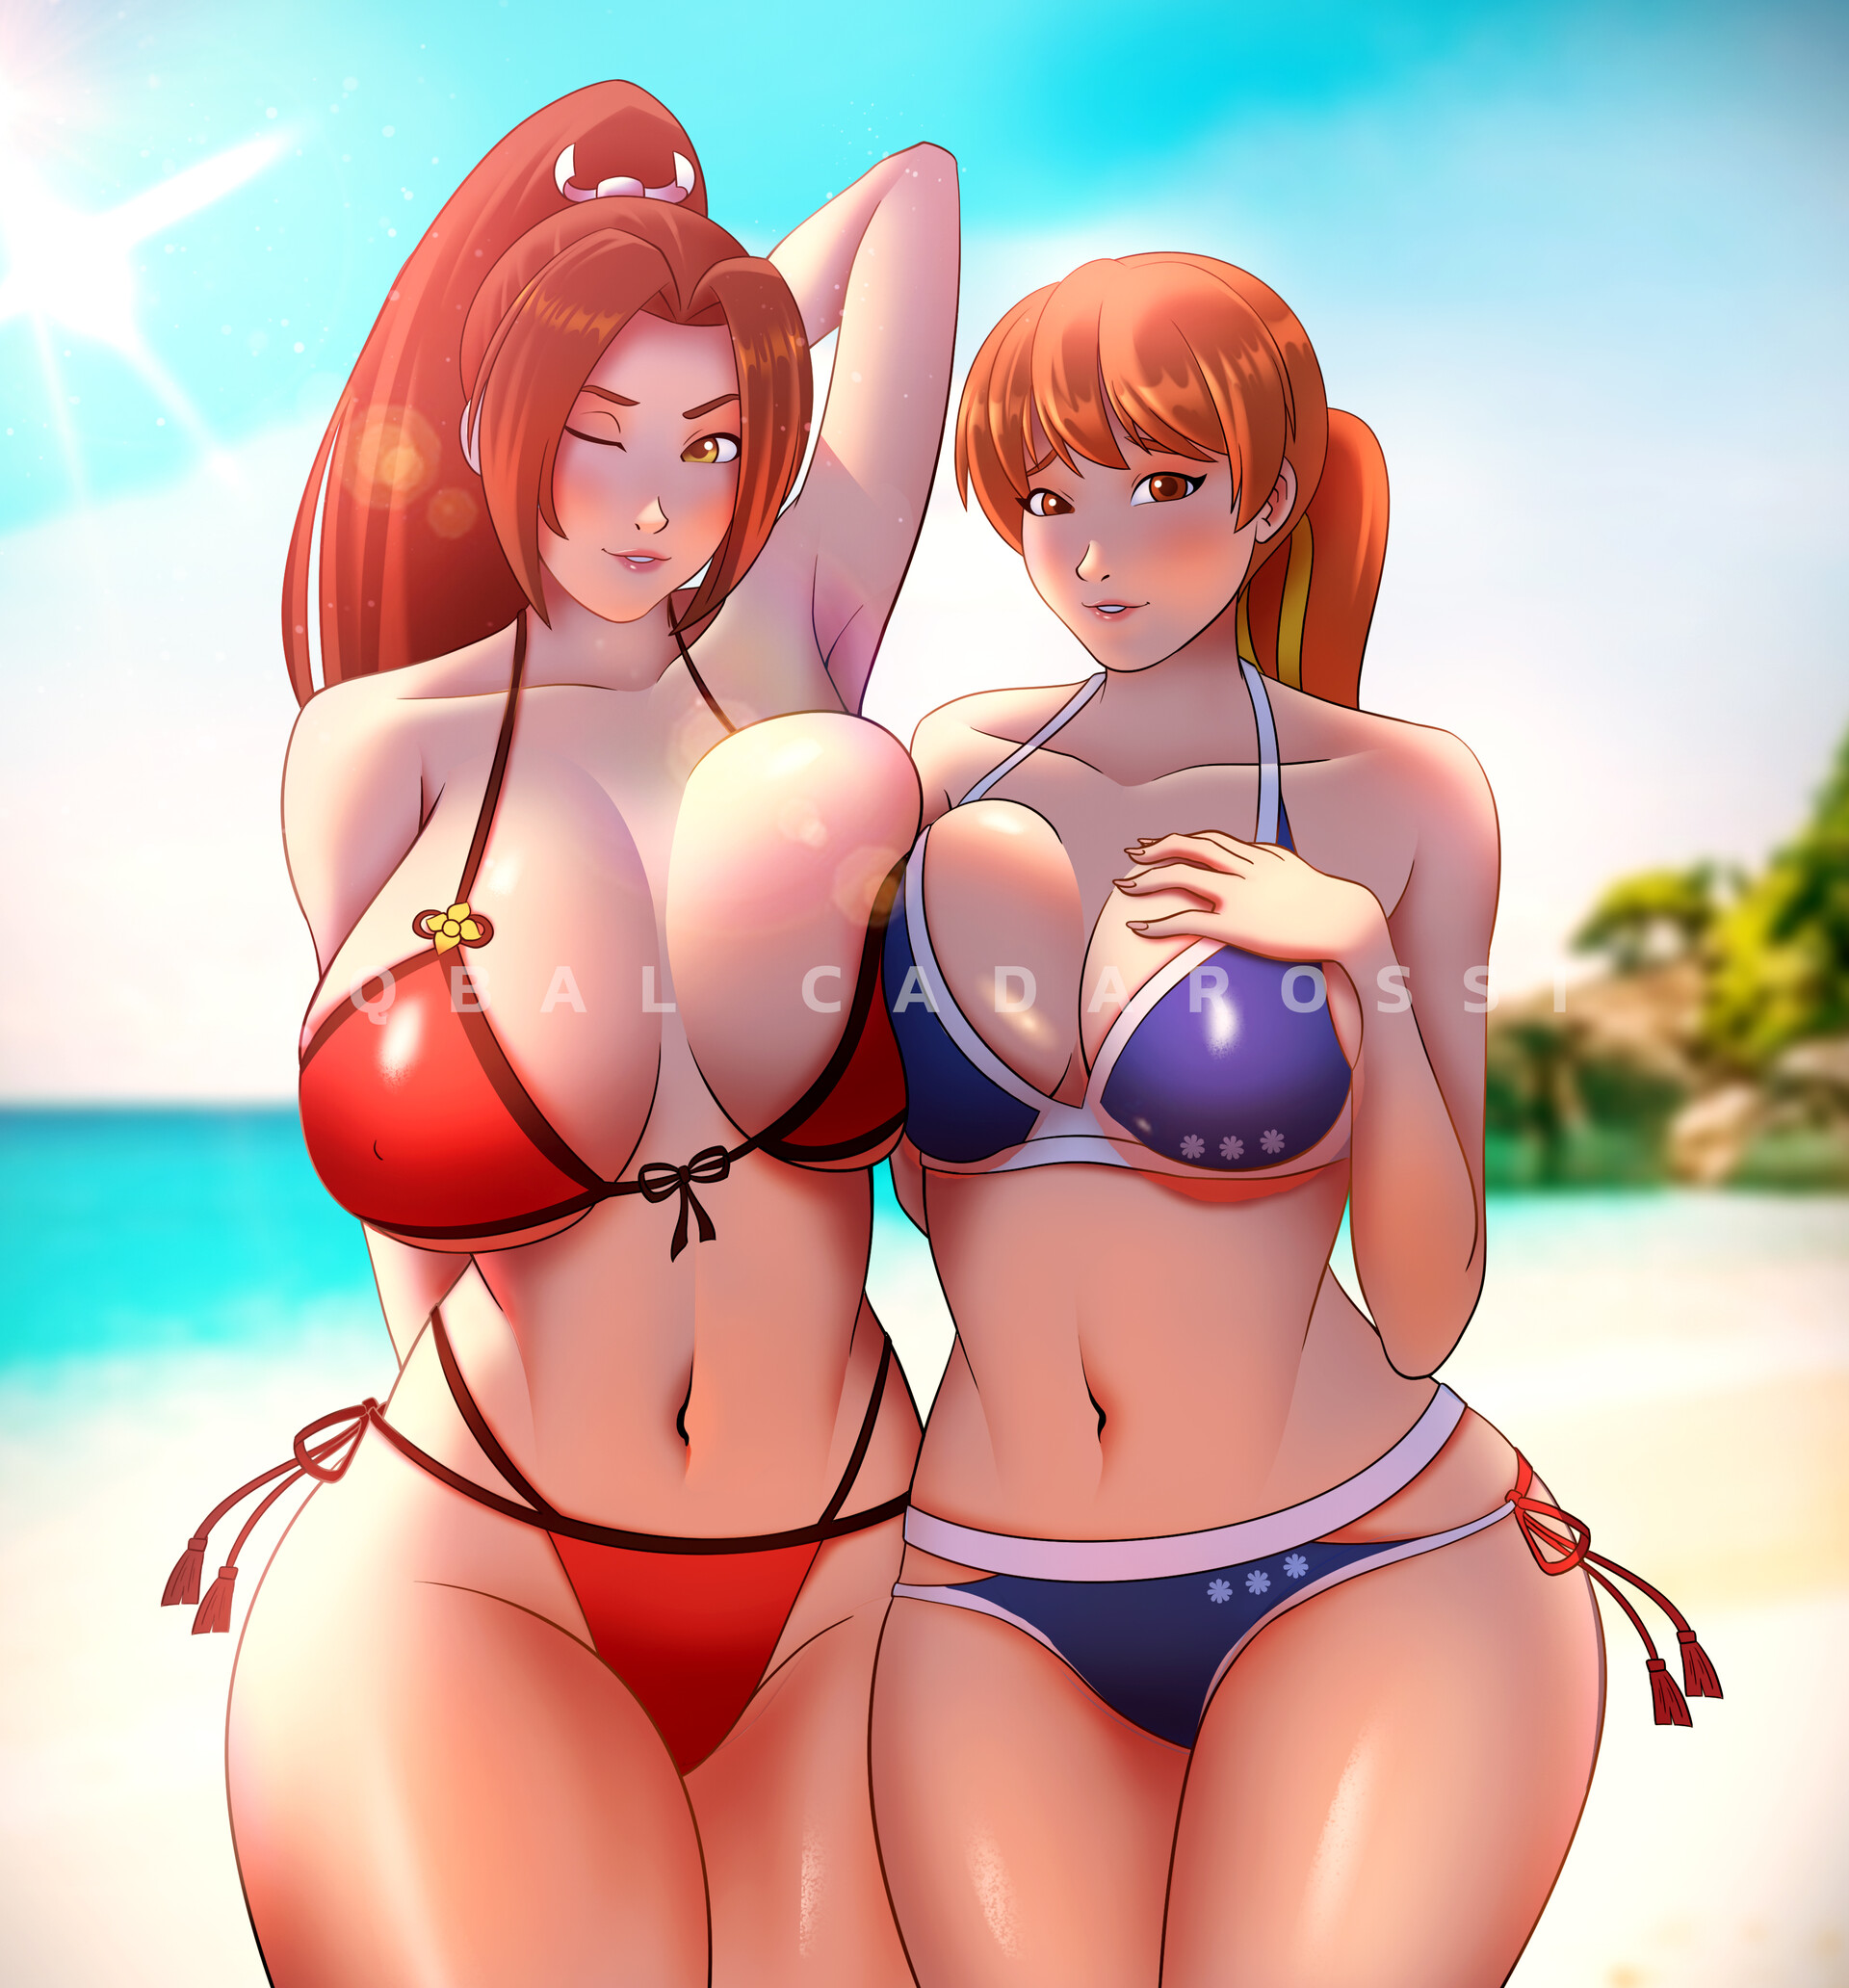 Mai Shiranui and Kasumi in Bikini.